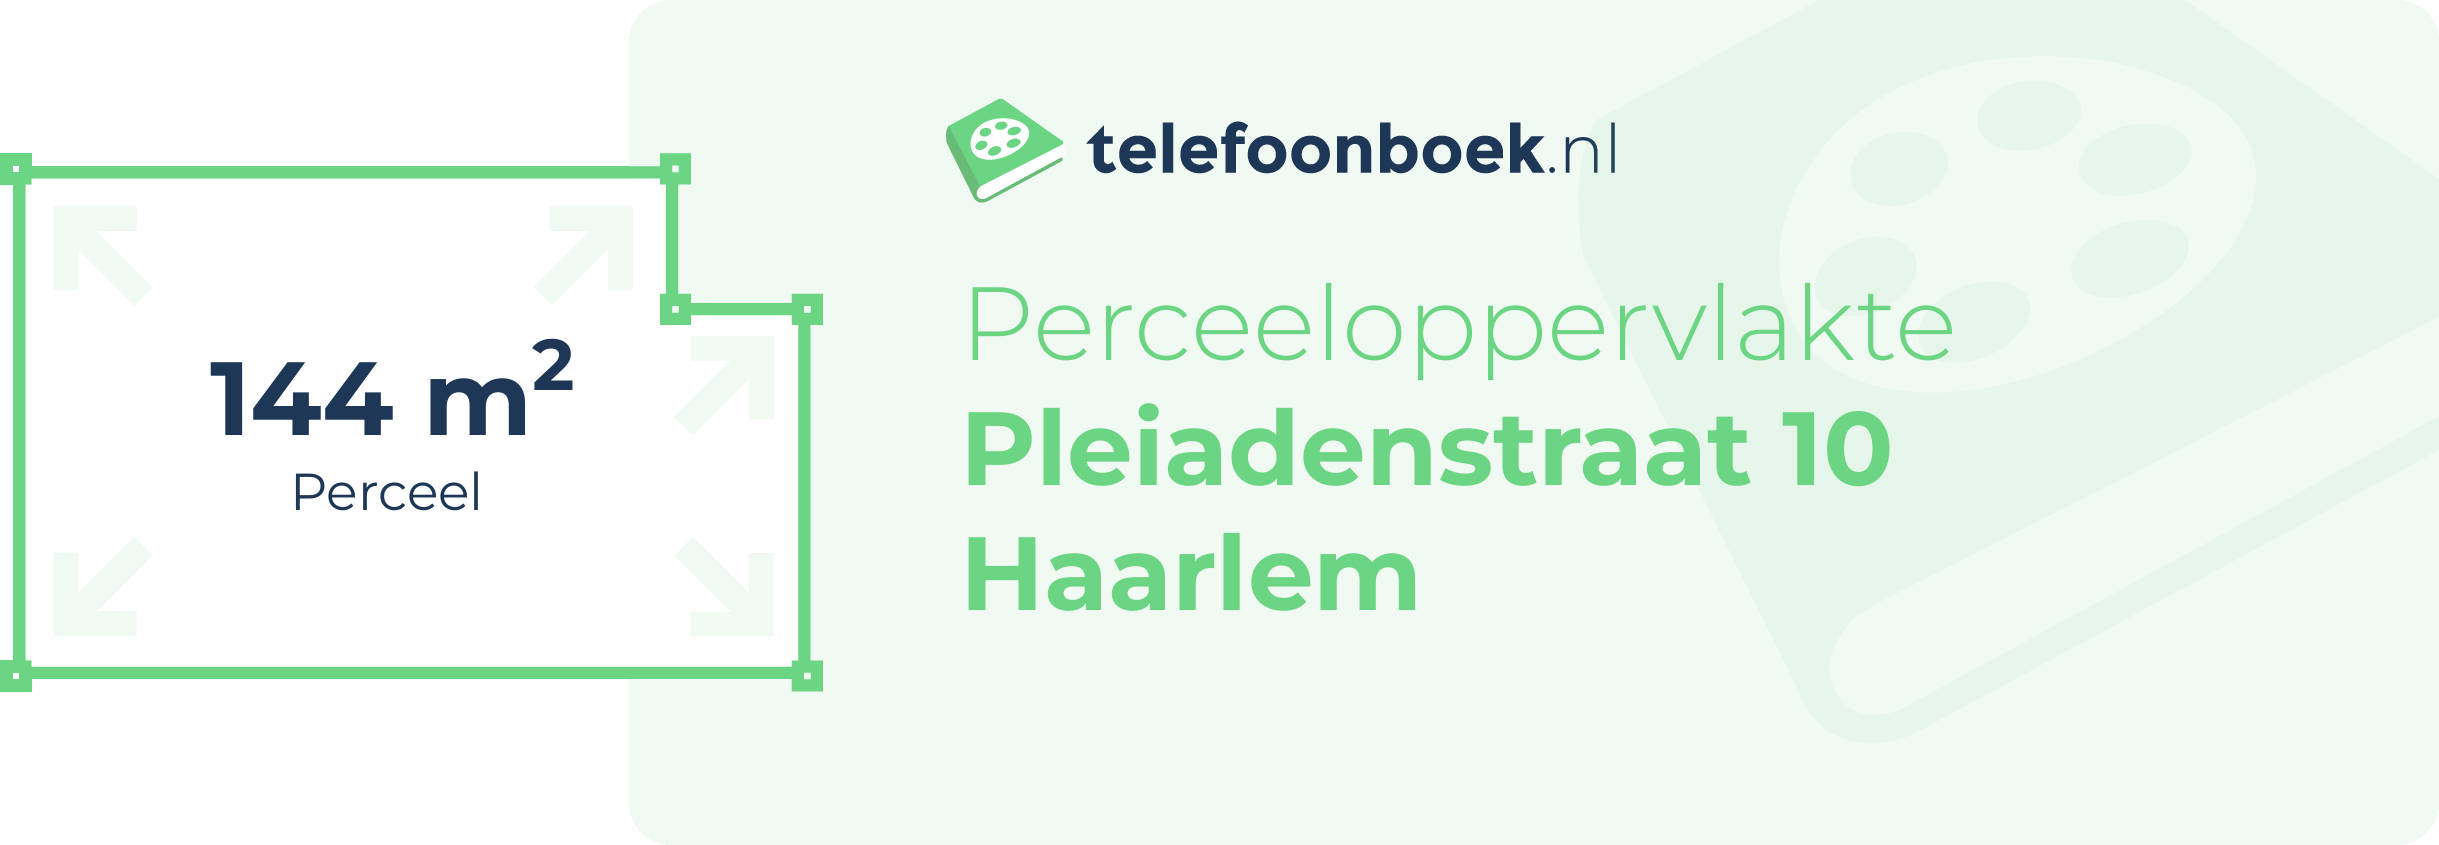 Perceeloppervlakte Pleiadenstraat 10 Haarlem